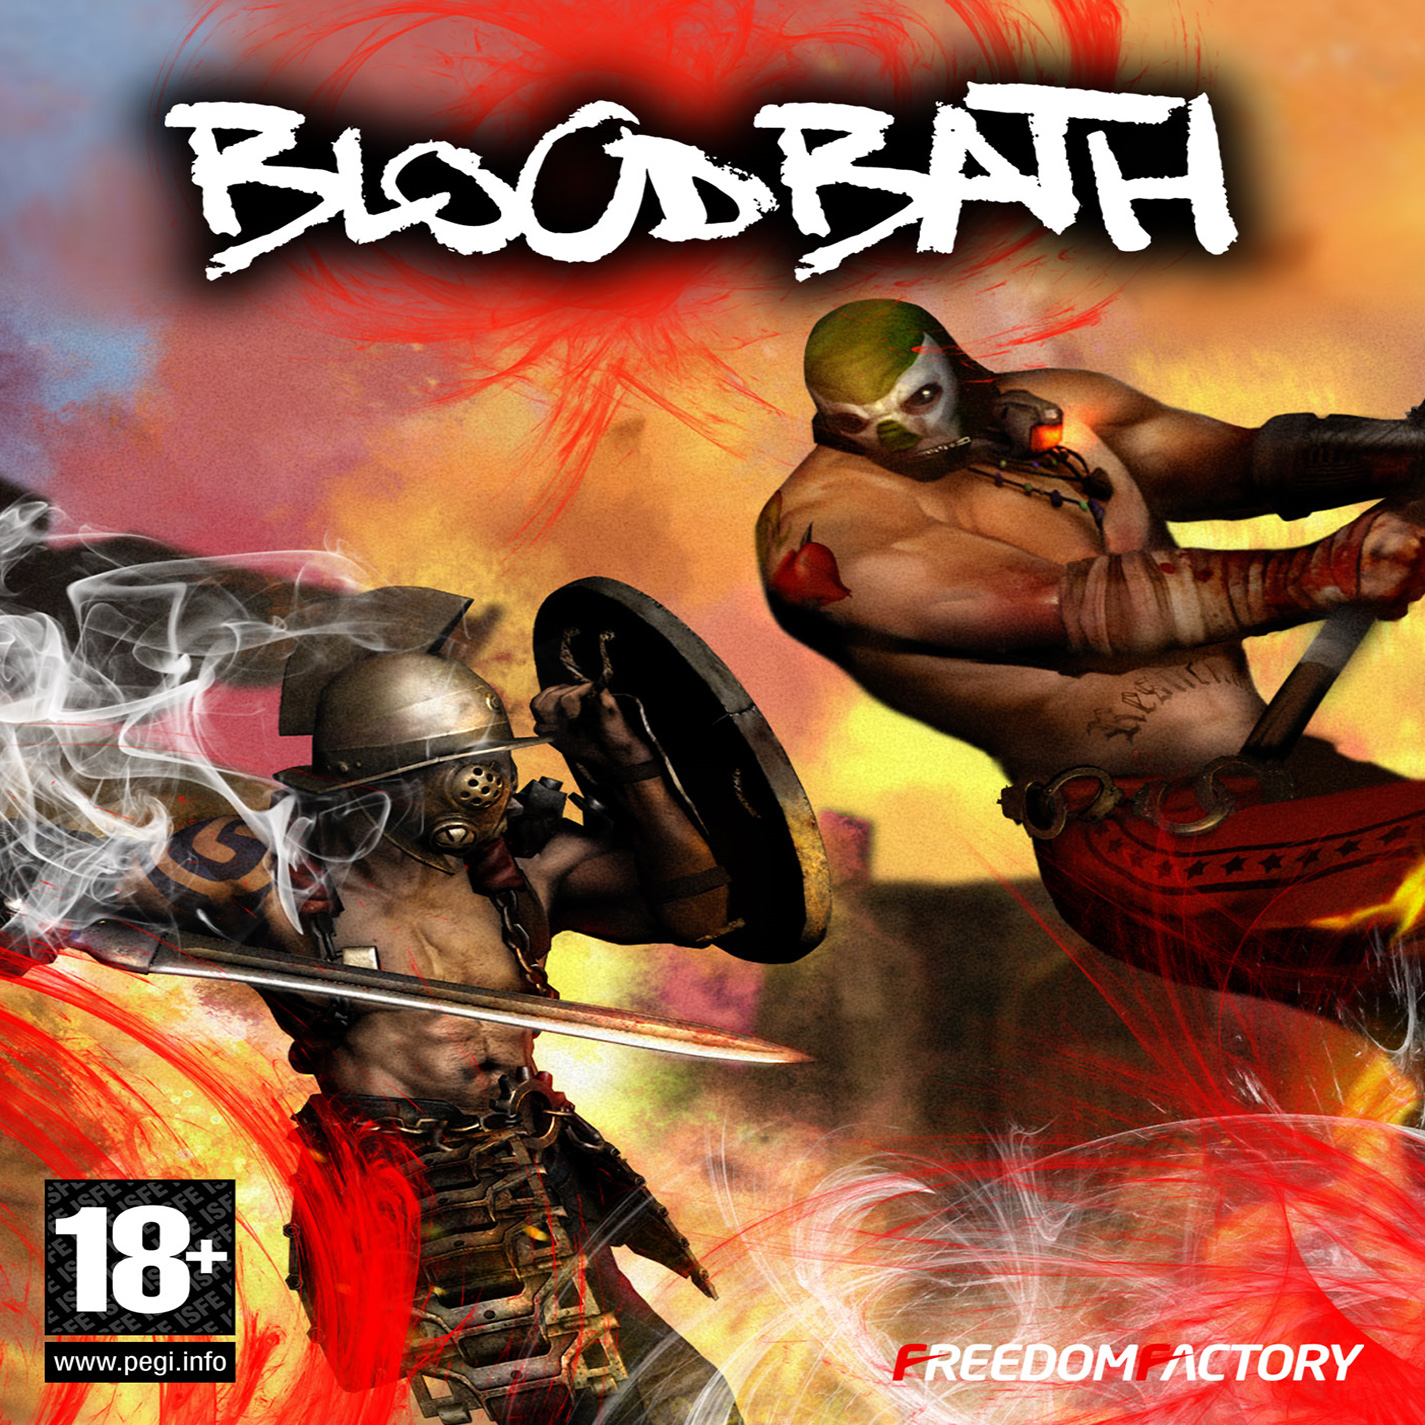 BloodBath - predn CD obal